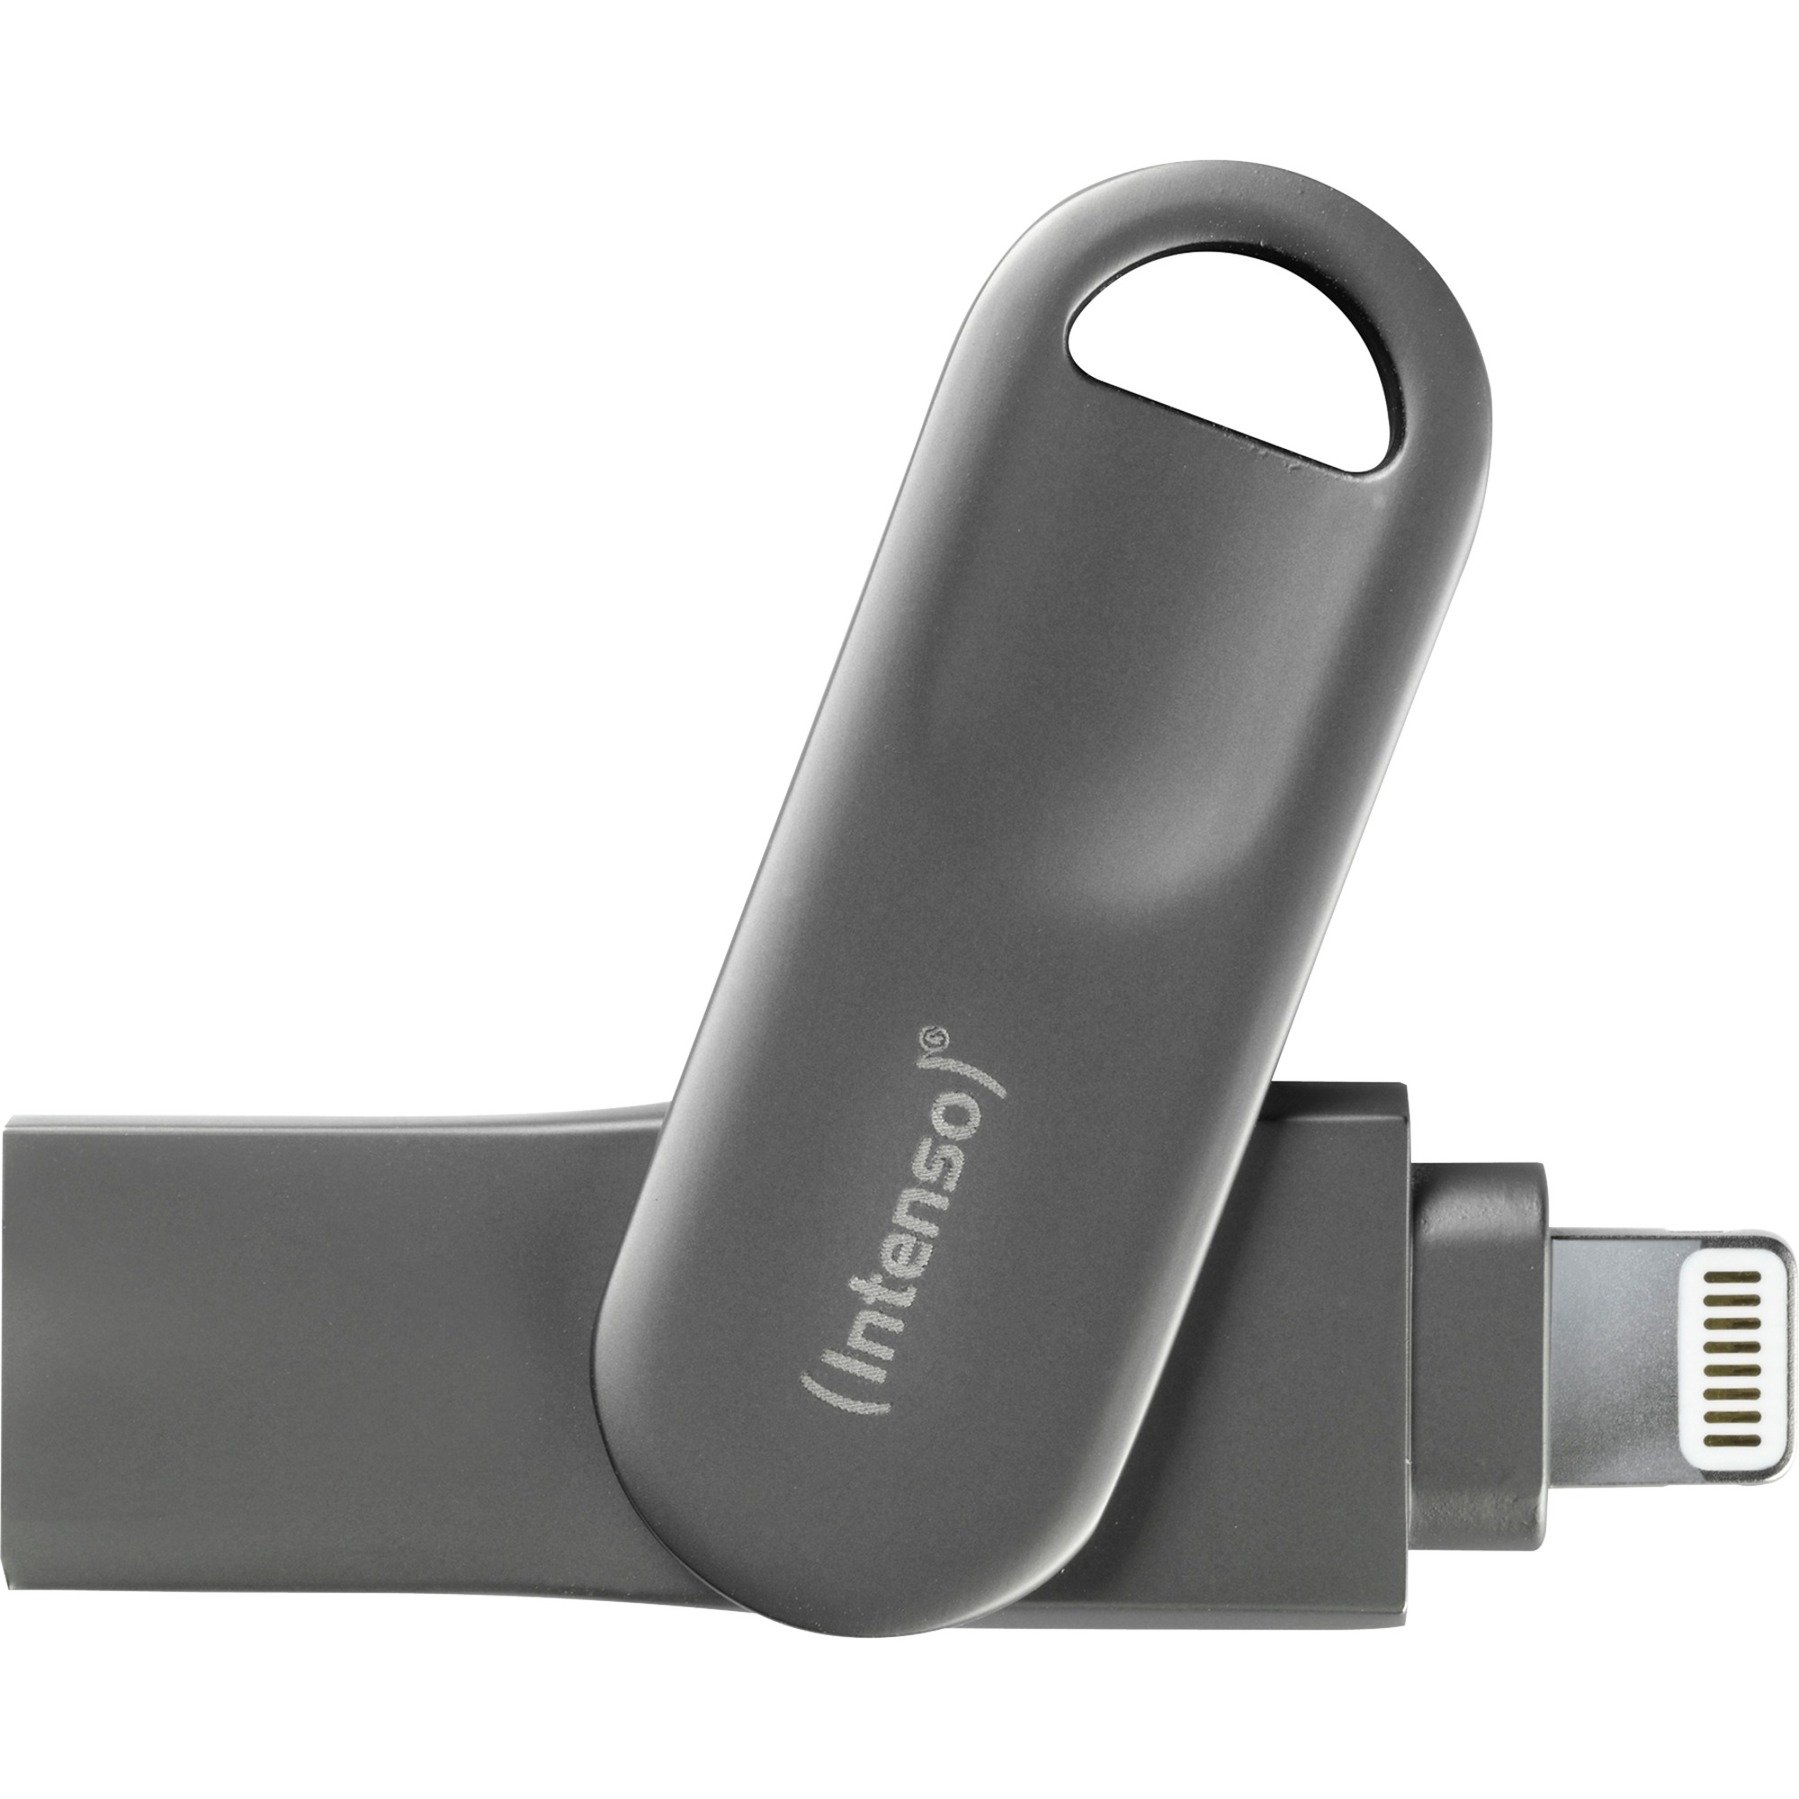 Image of Alternate - iMobile Line Pro 32 GB, USB-Stick online einkaufen bei Alternate